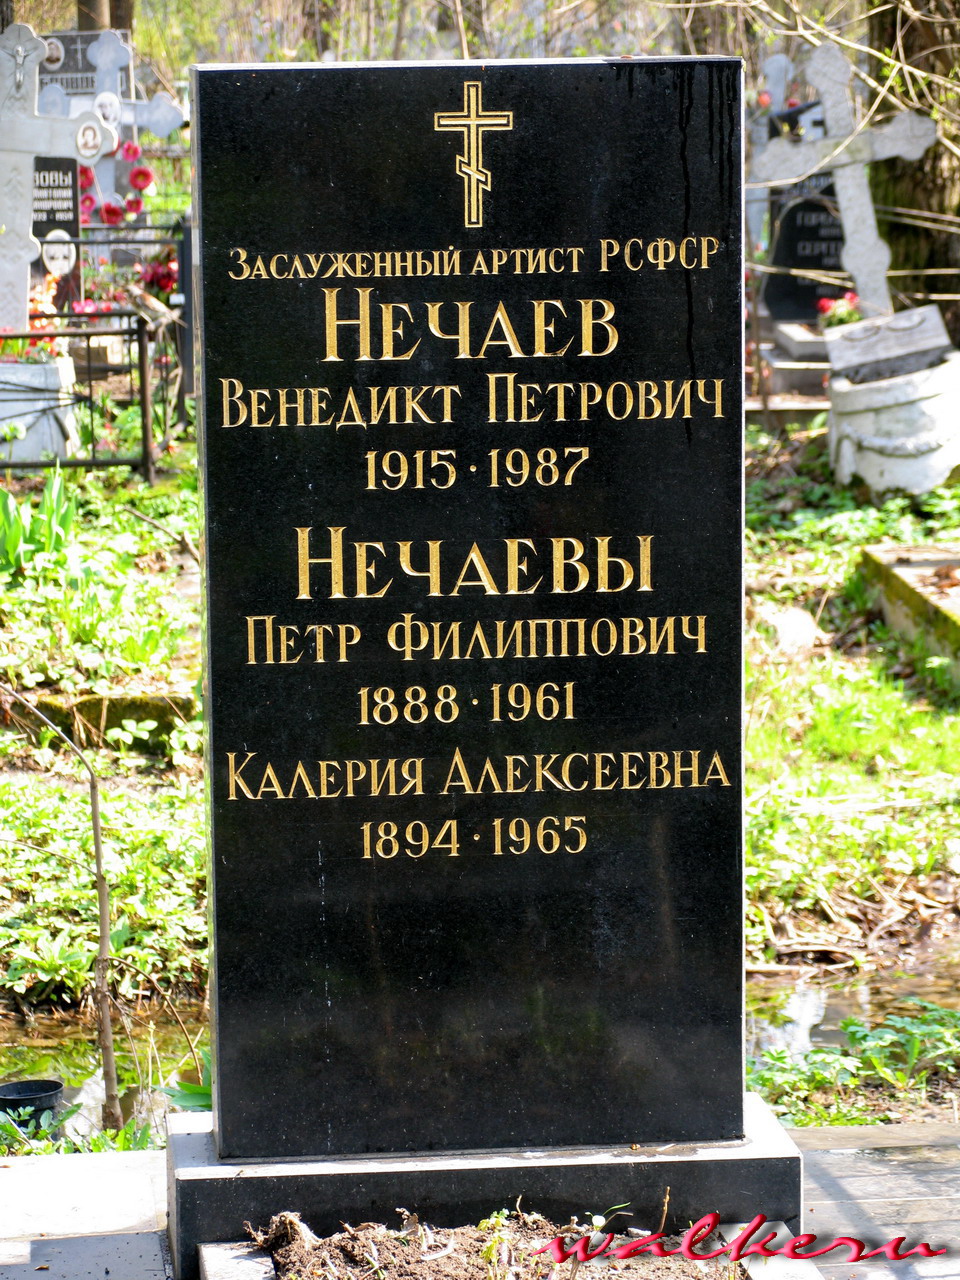 Могила НЕЧАЕВА В.П. на Ново-Волковском кладбище